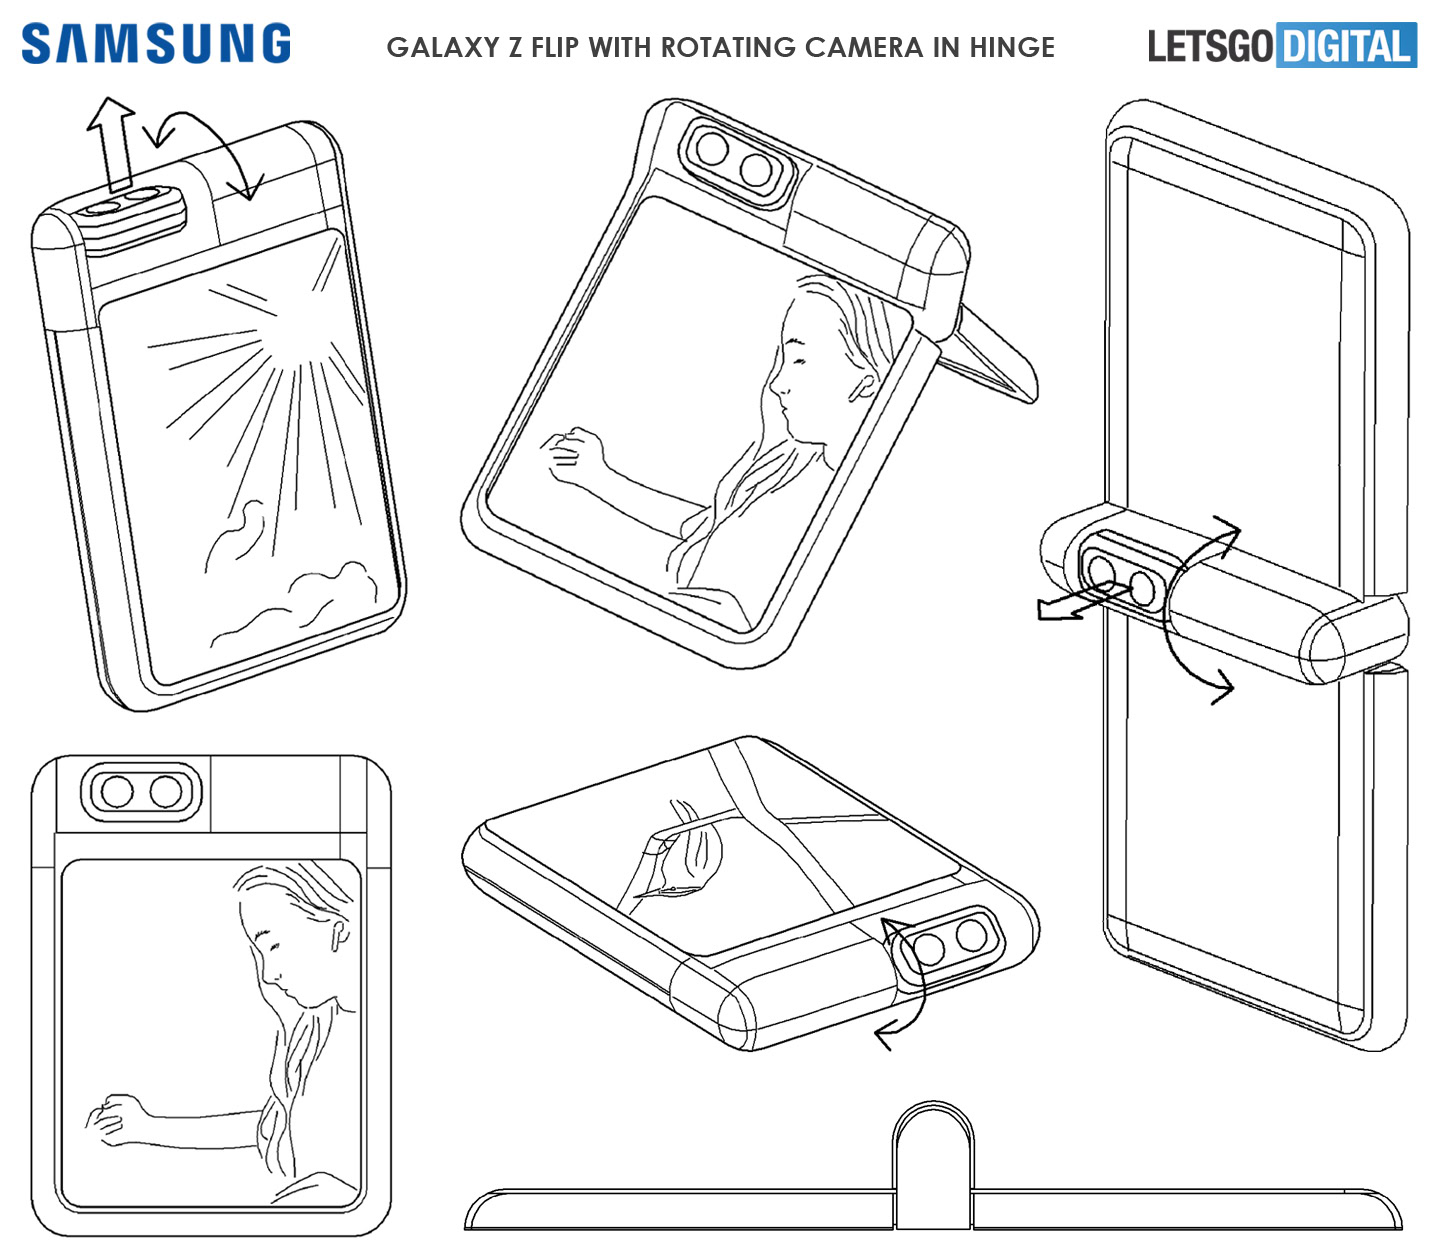 Samsung Galaxy Z Flip flipping camera letsgodigital